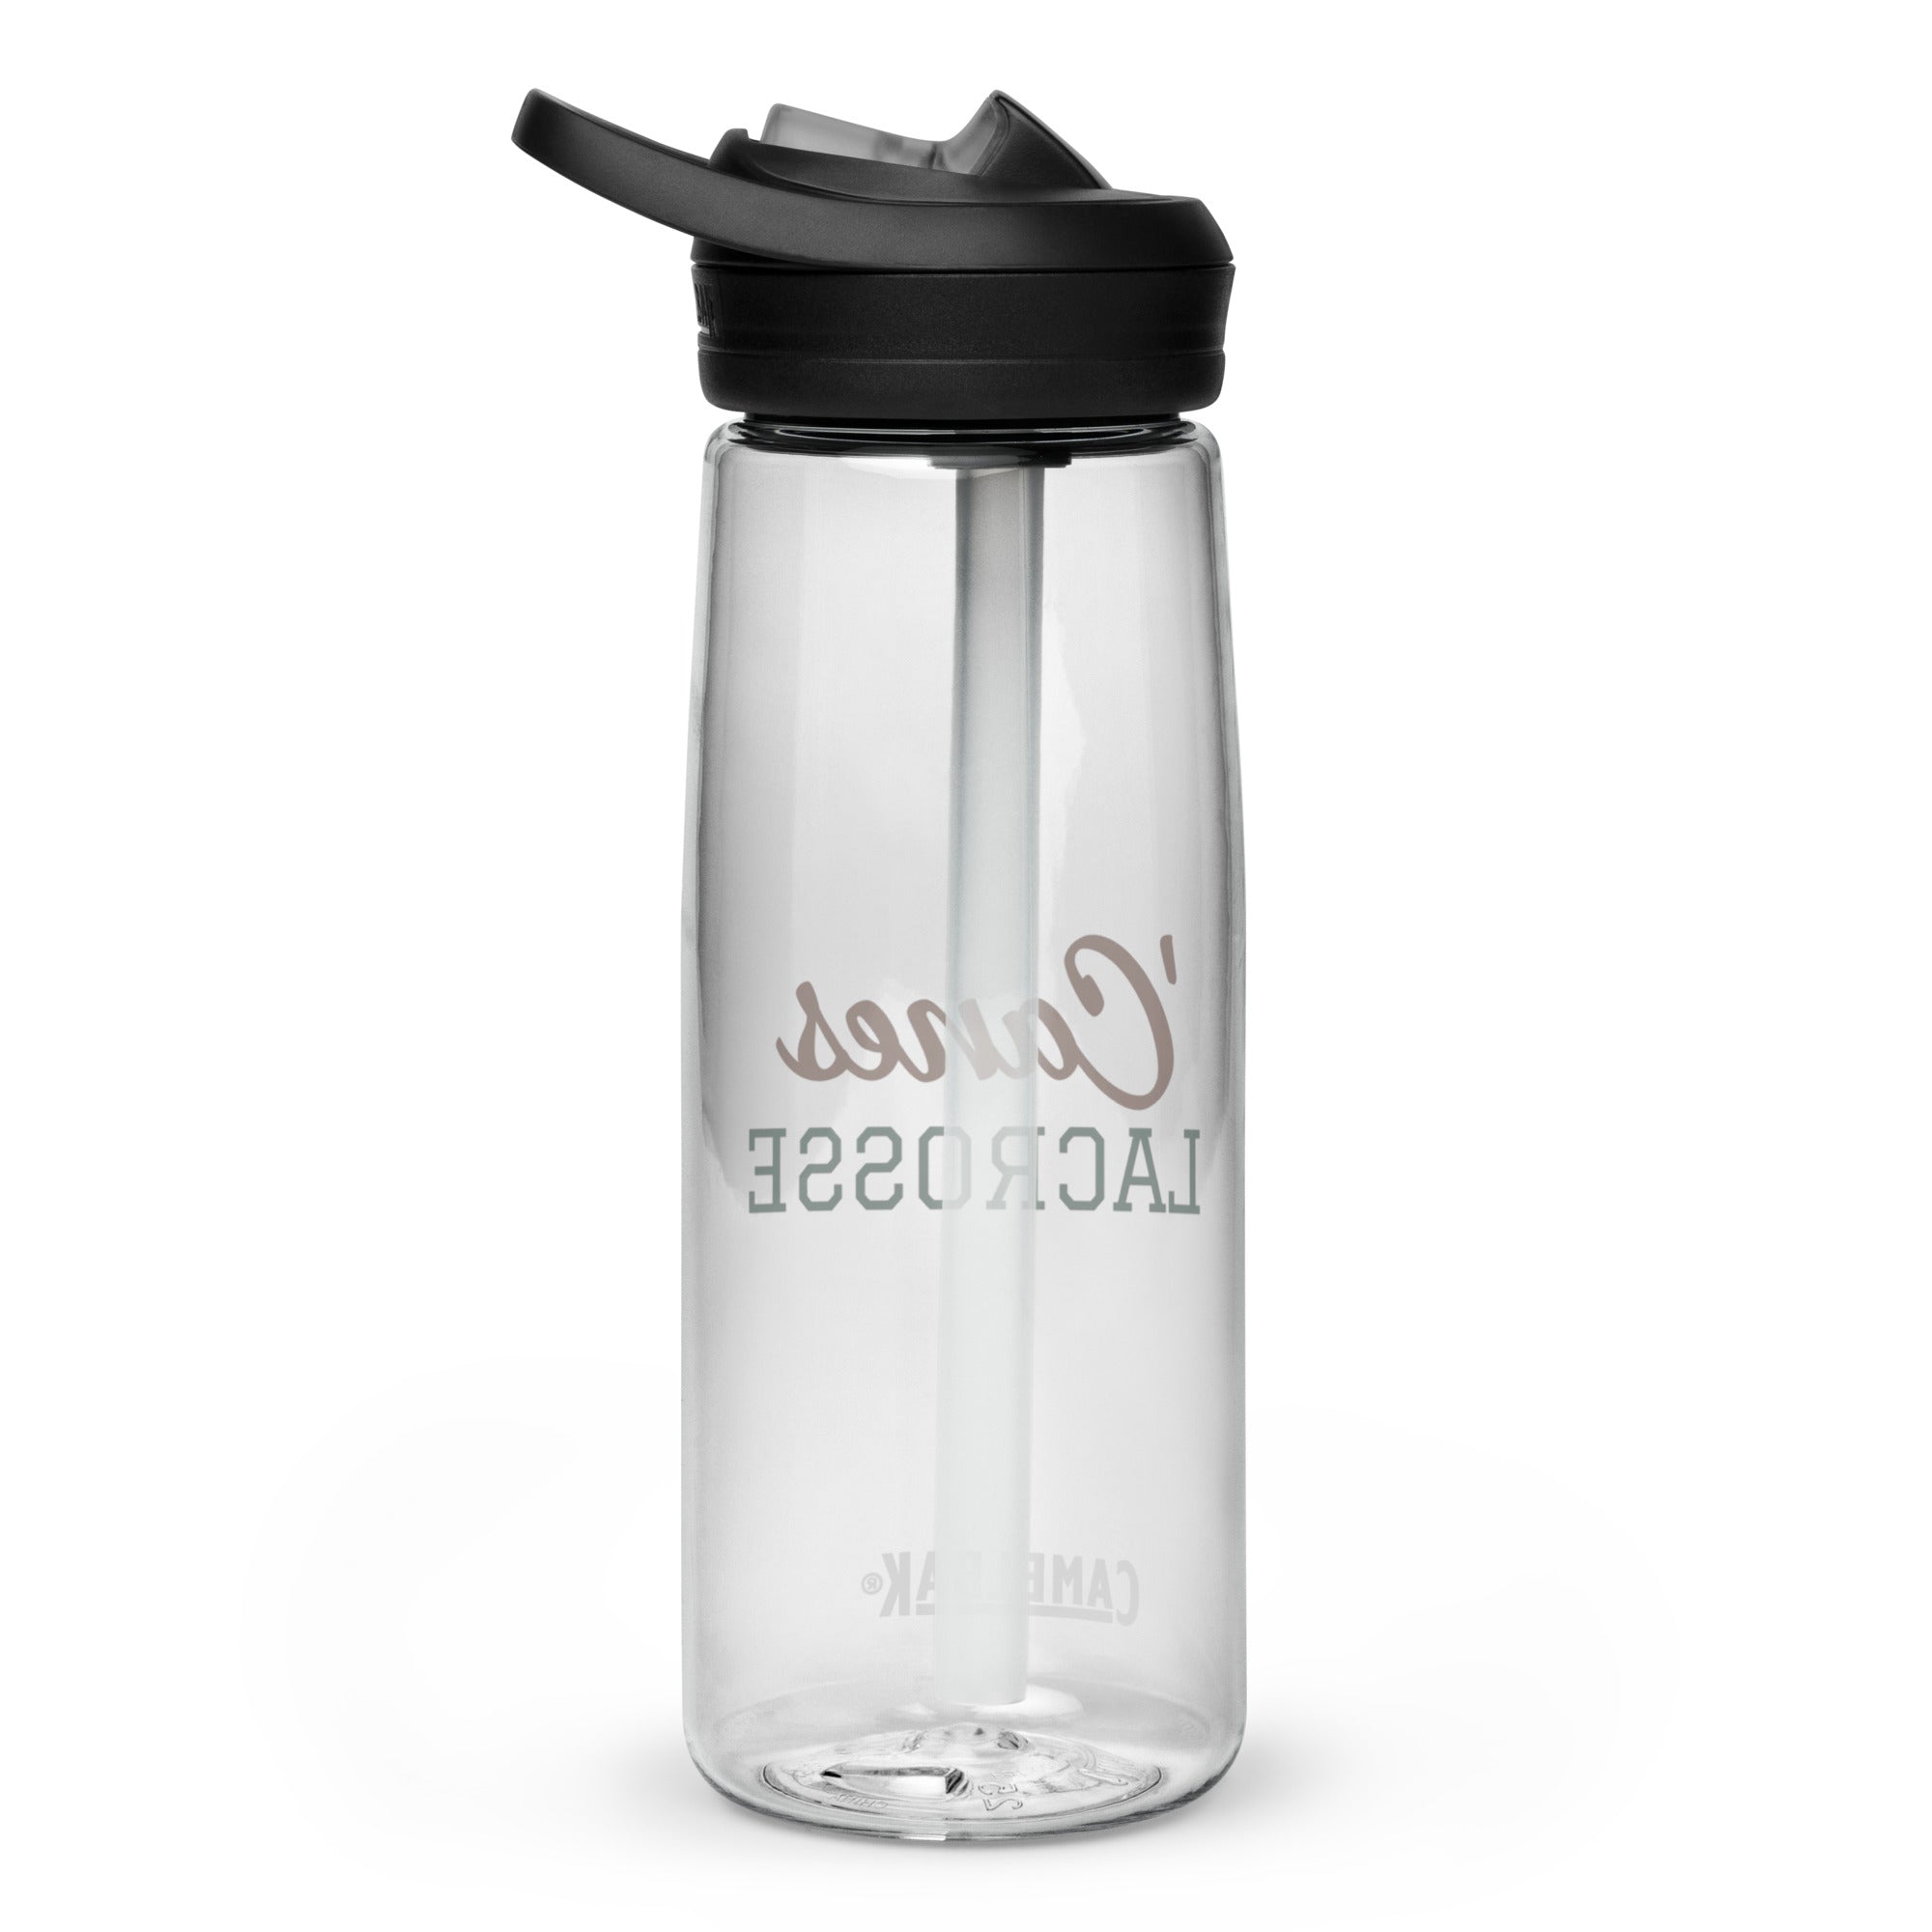 Miami Sports water bottle